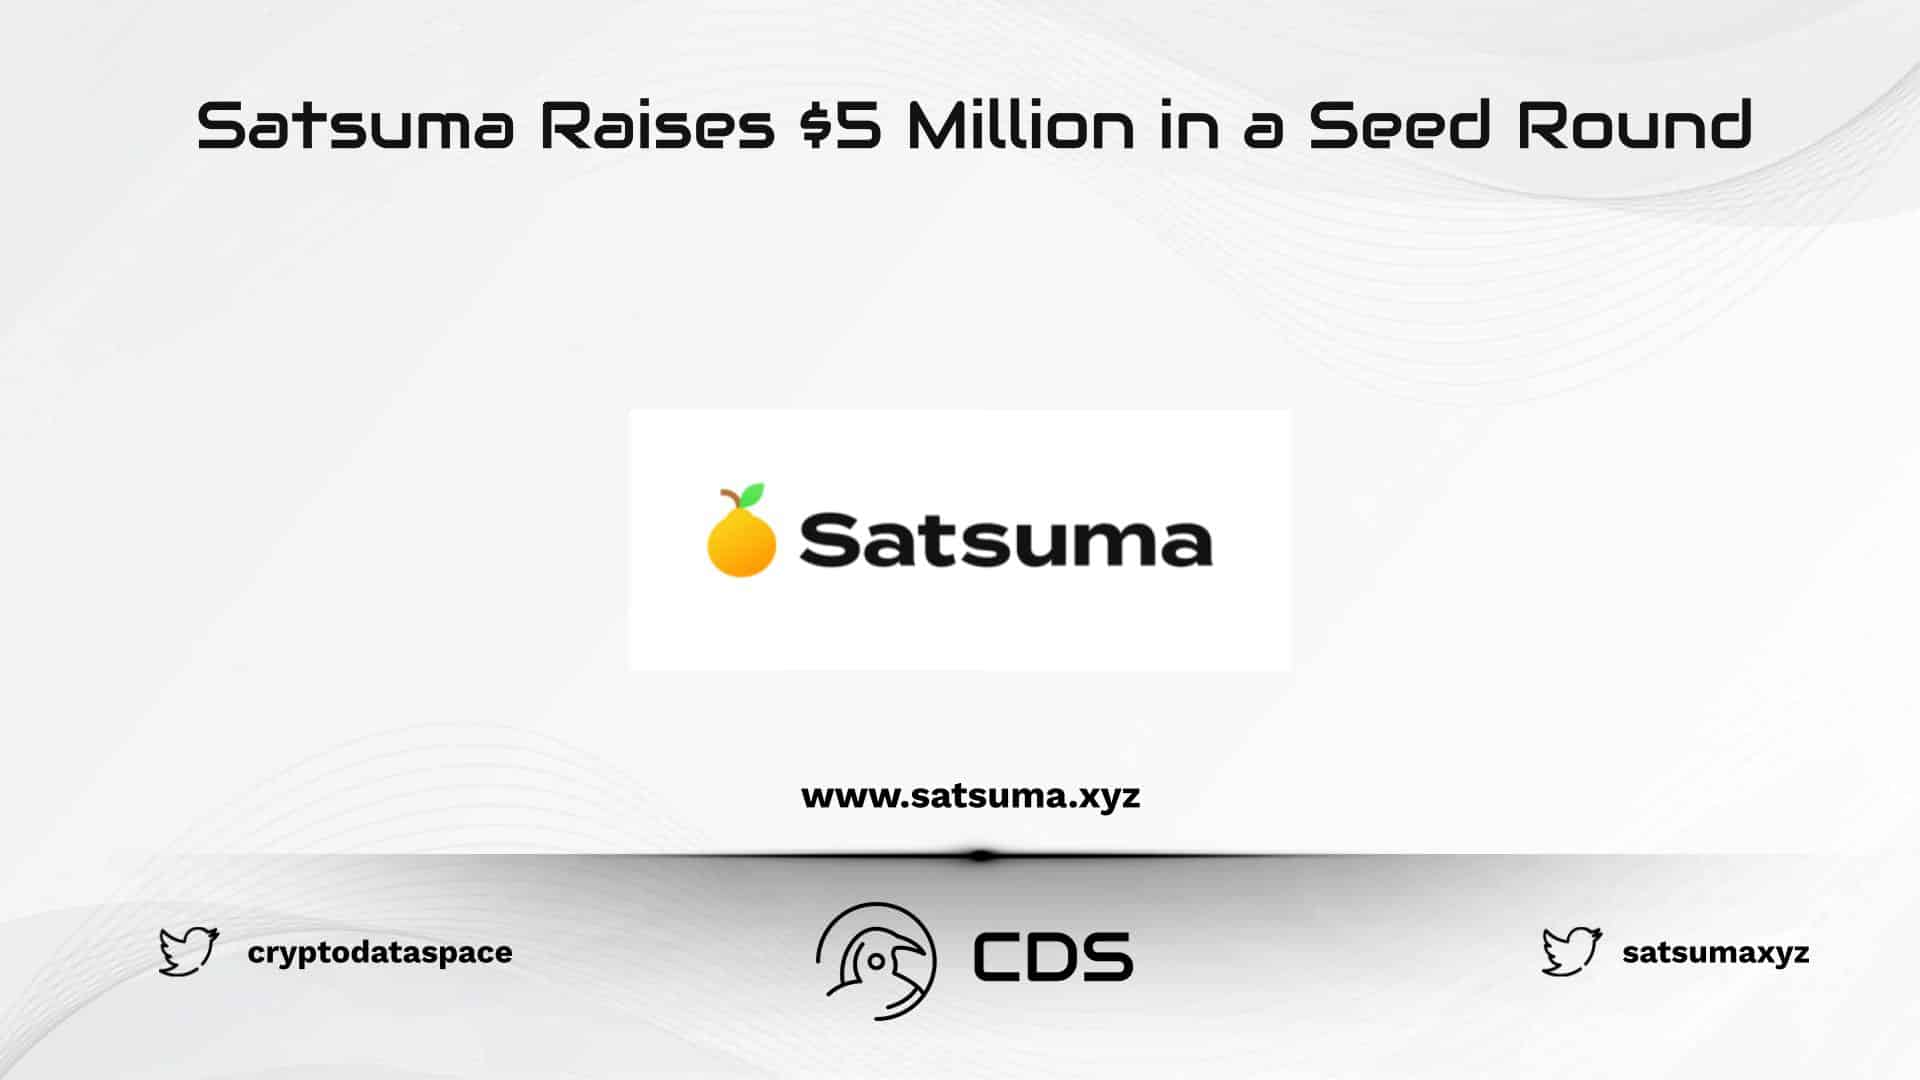 Satsuma Raises $5 Million in a Seed Round